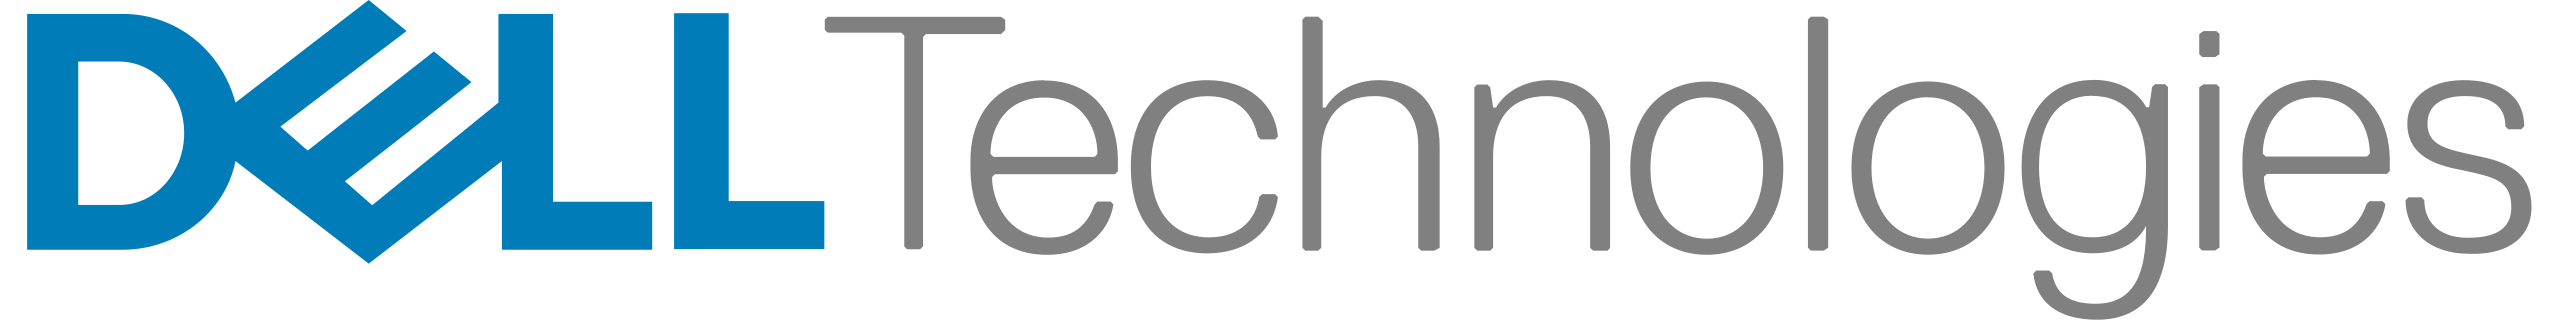 Dell-Technologies-logo